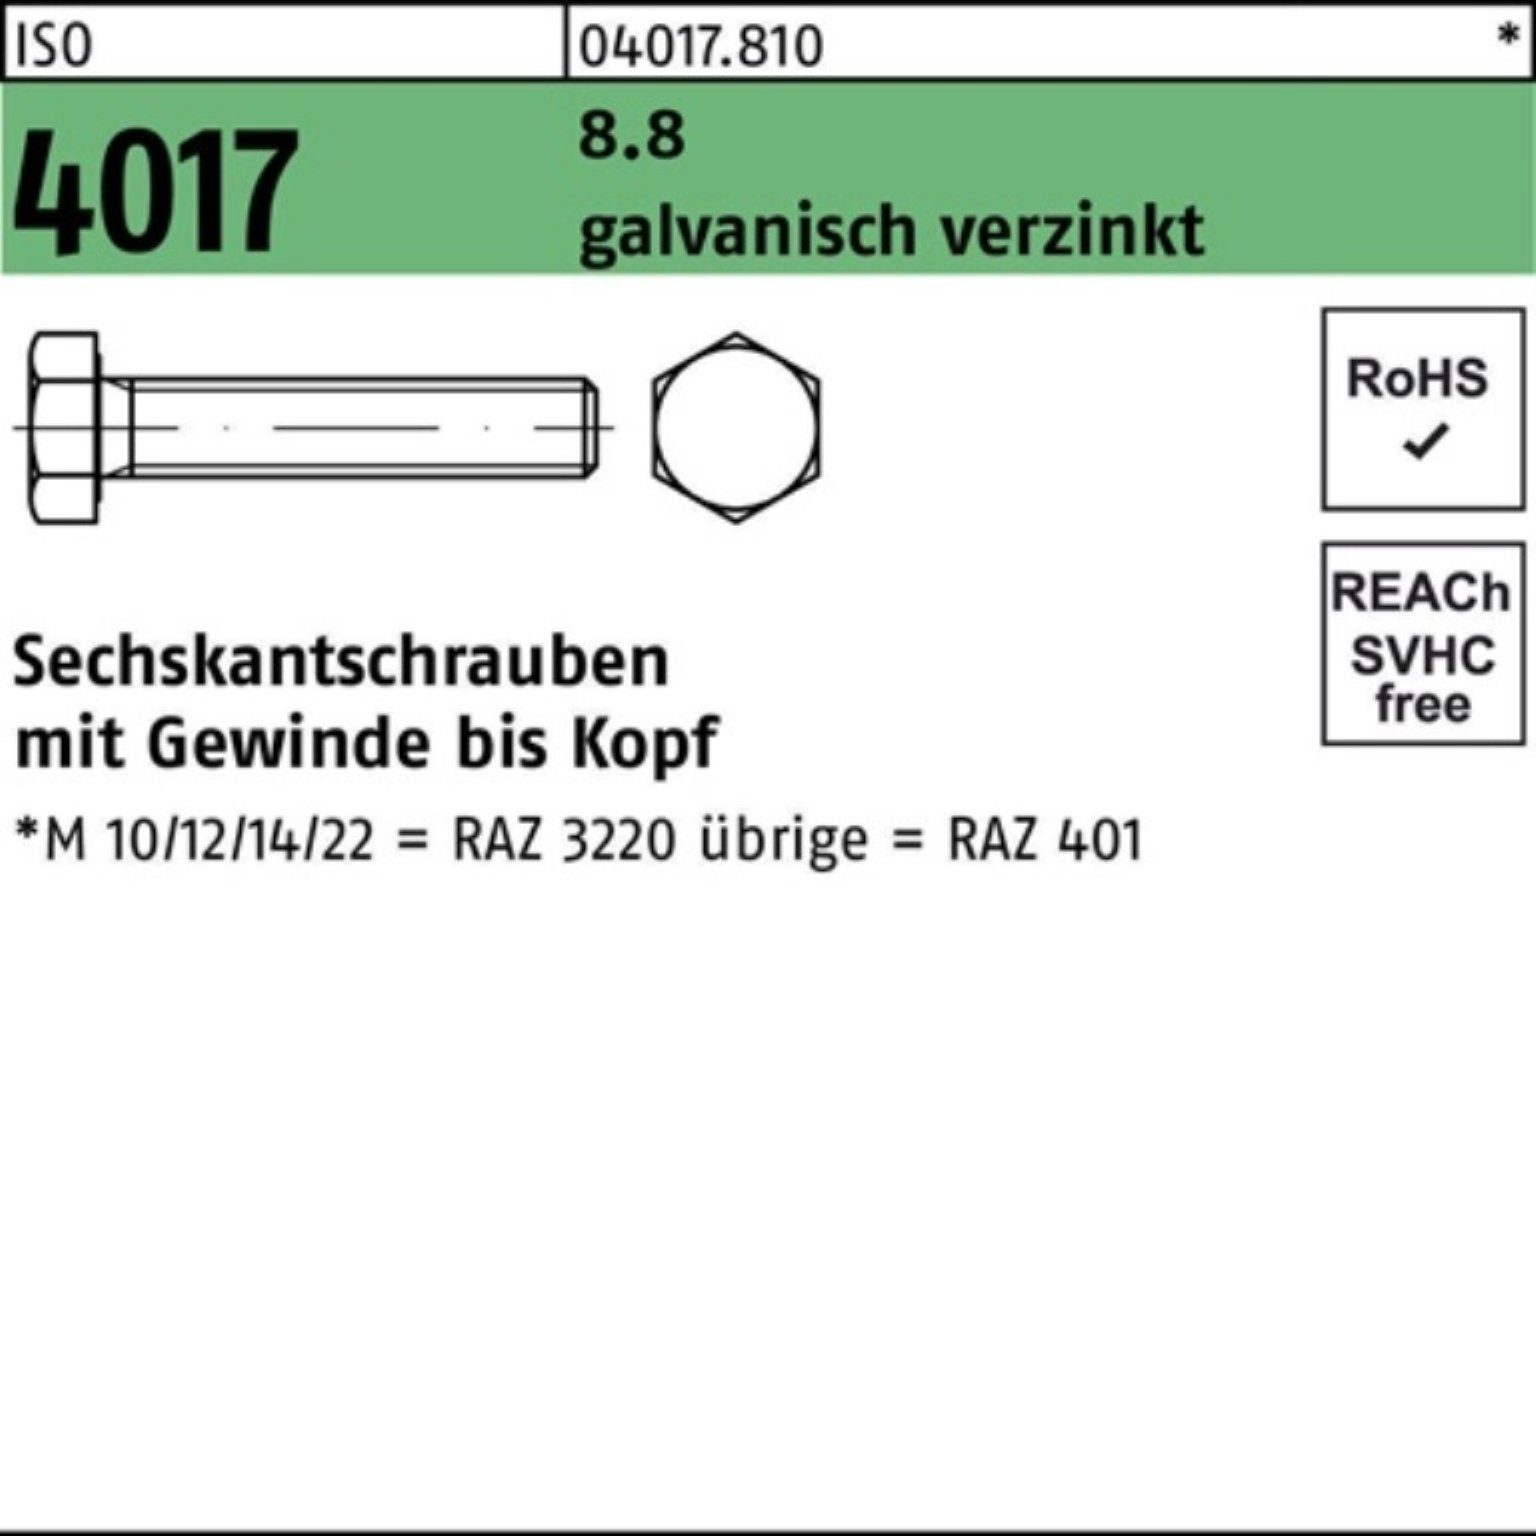 500er VG St Sechskantschraube Bufab Sechskantschraube 12 galv.verz. 500 ISO 4017 Pack 8.8 M4x